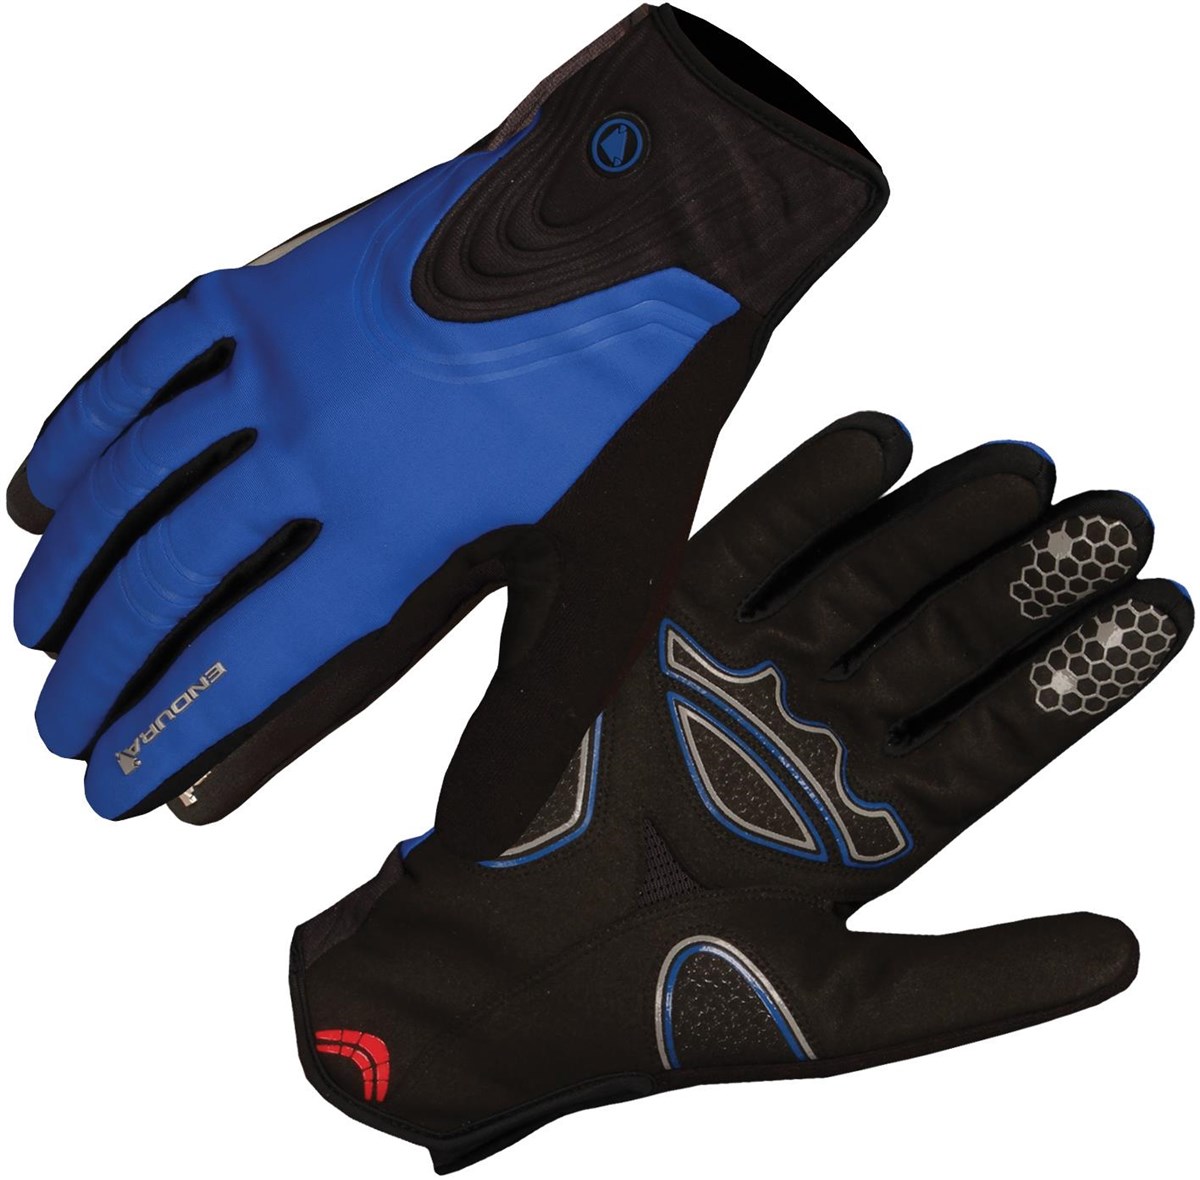 Endura Windchill Long Finger Cycling Gloves product image